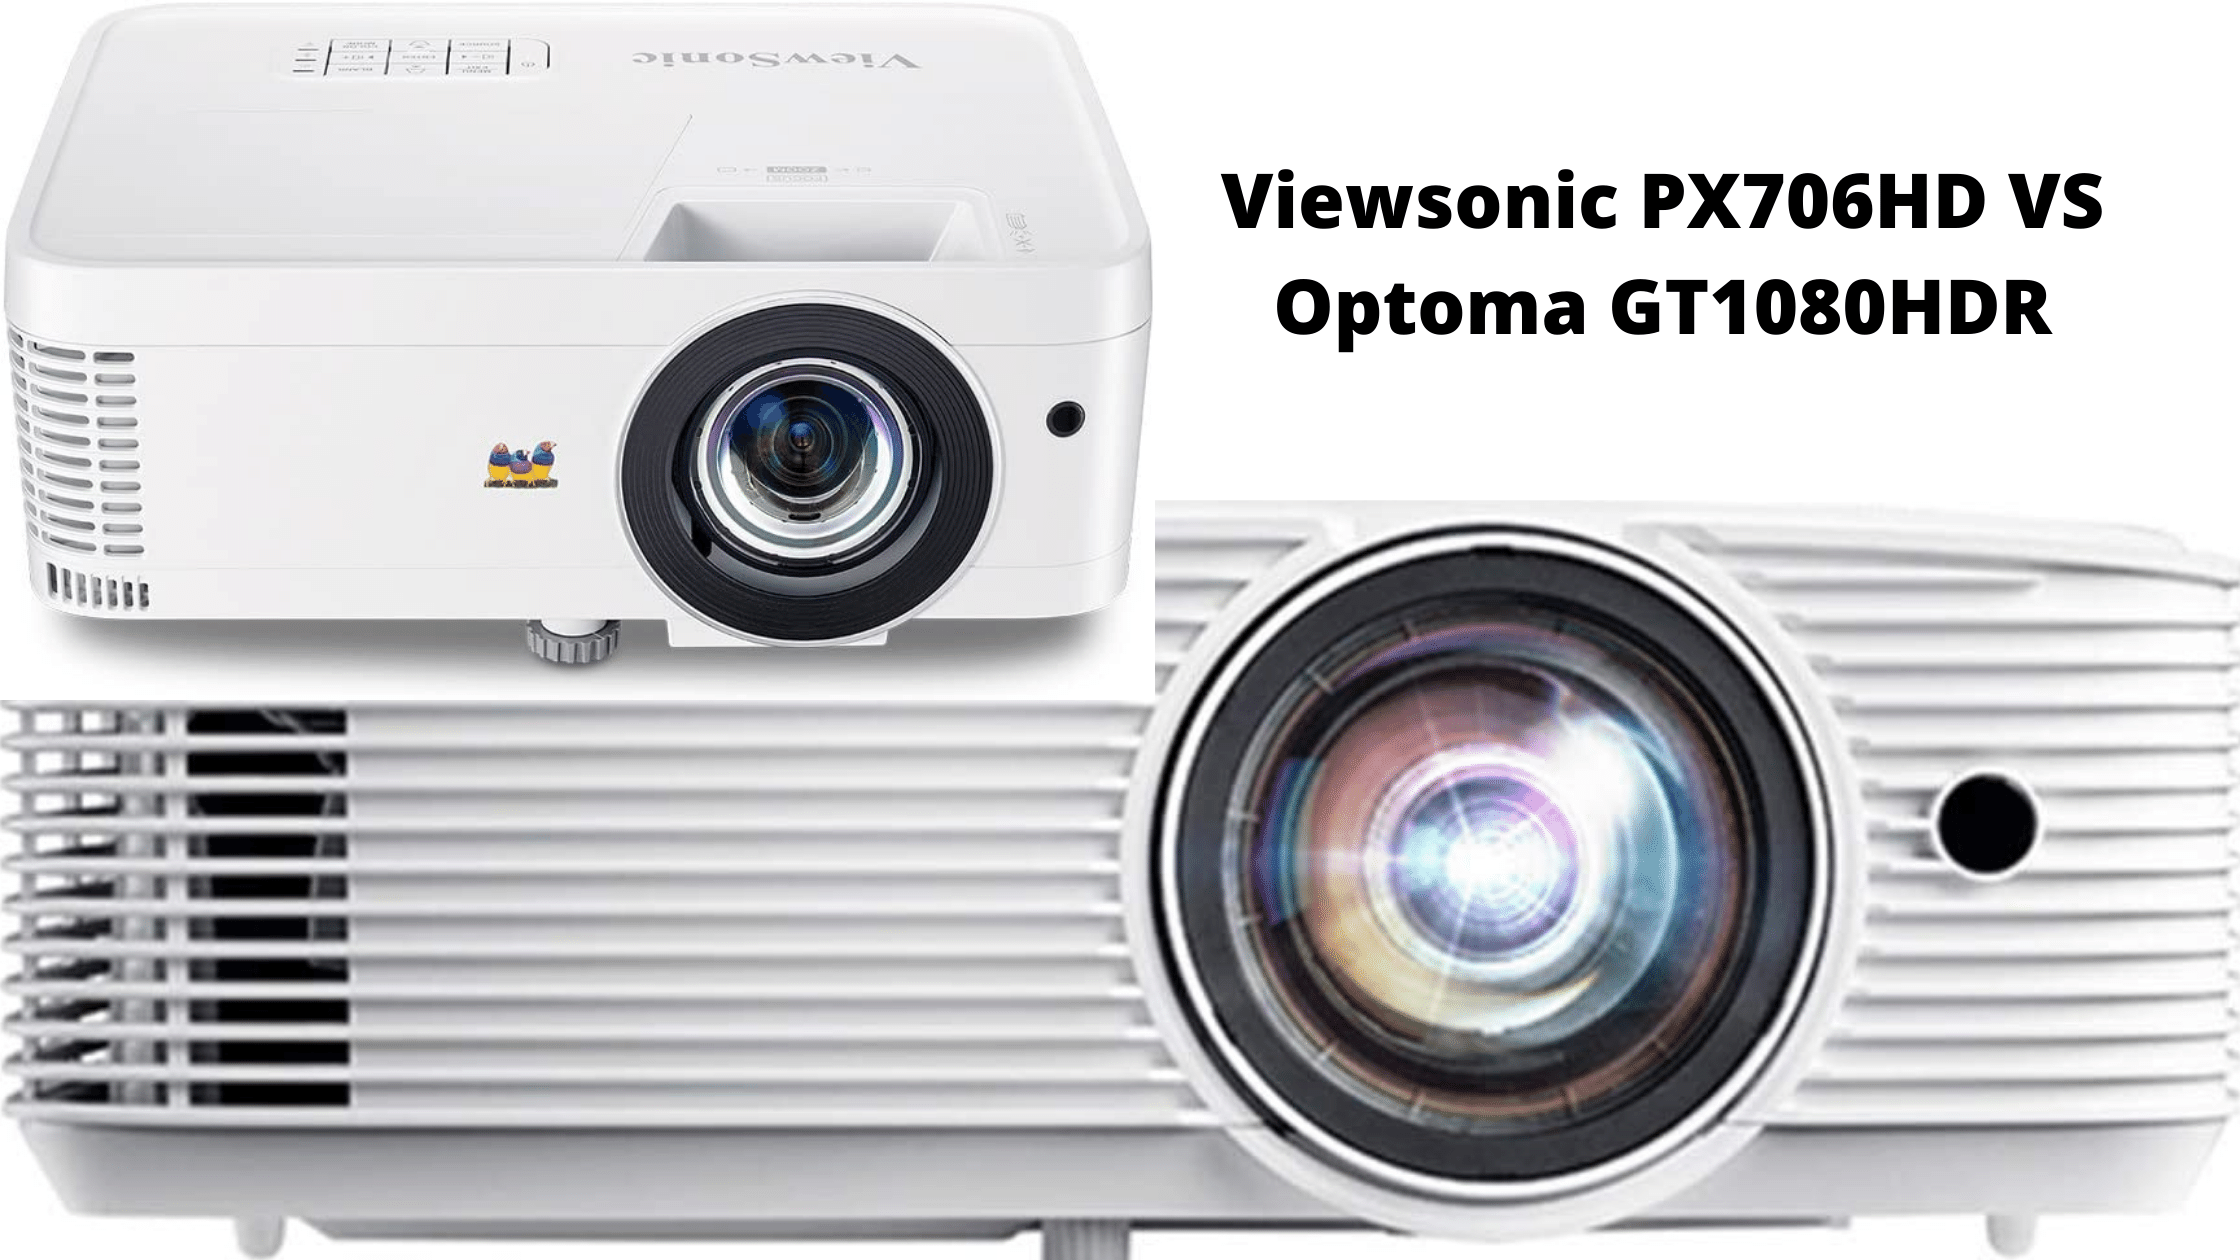 Viewsonic PX706HD VS Optoma GT1080HDR